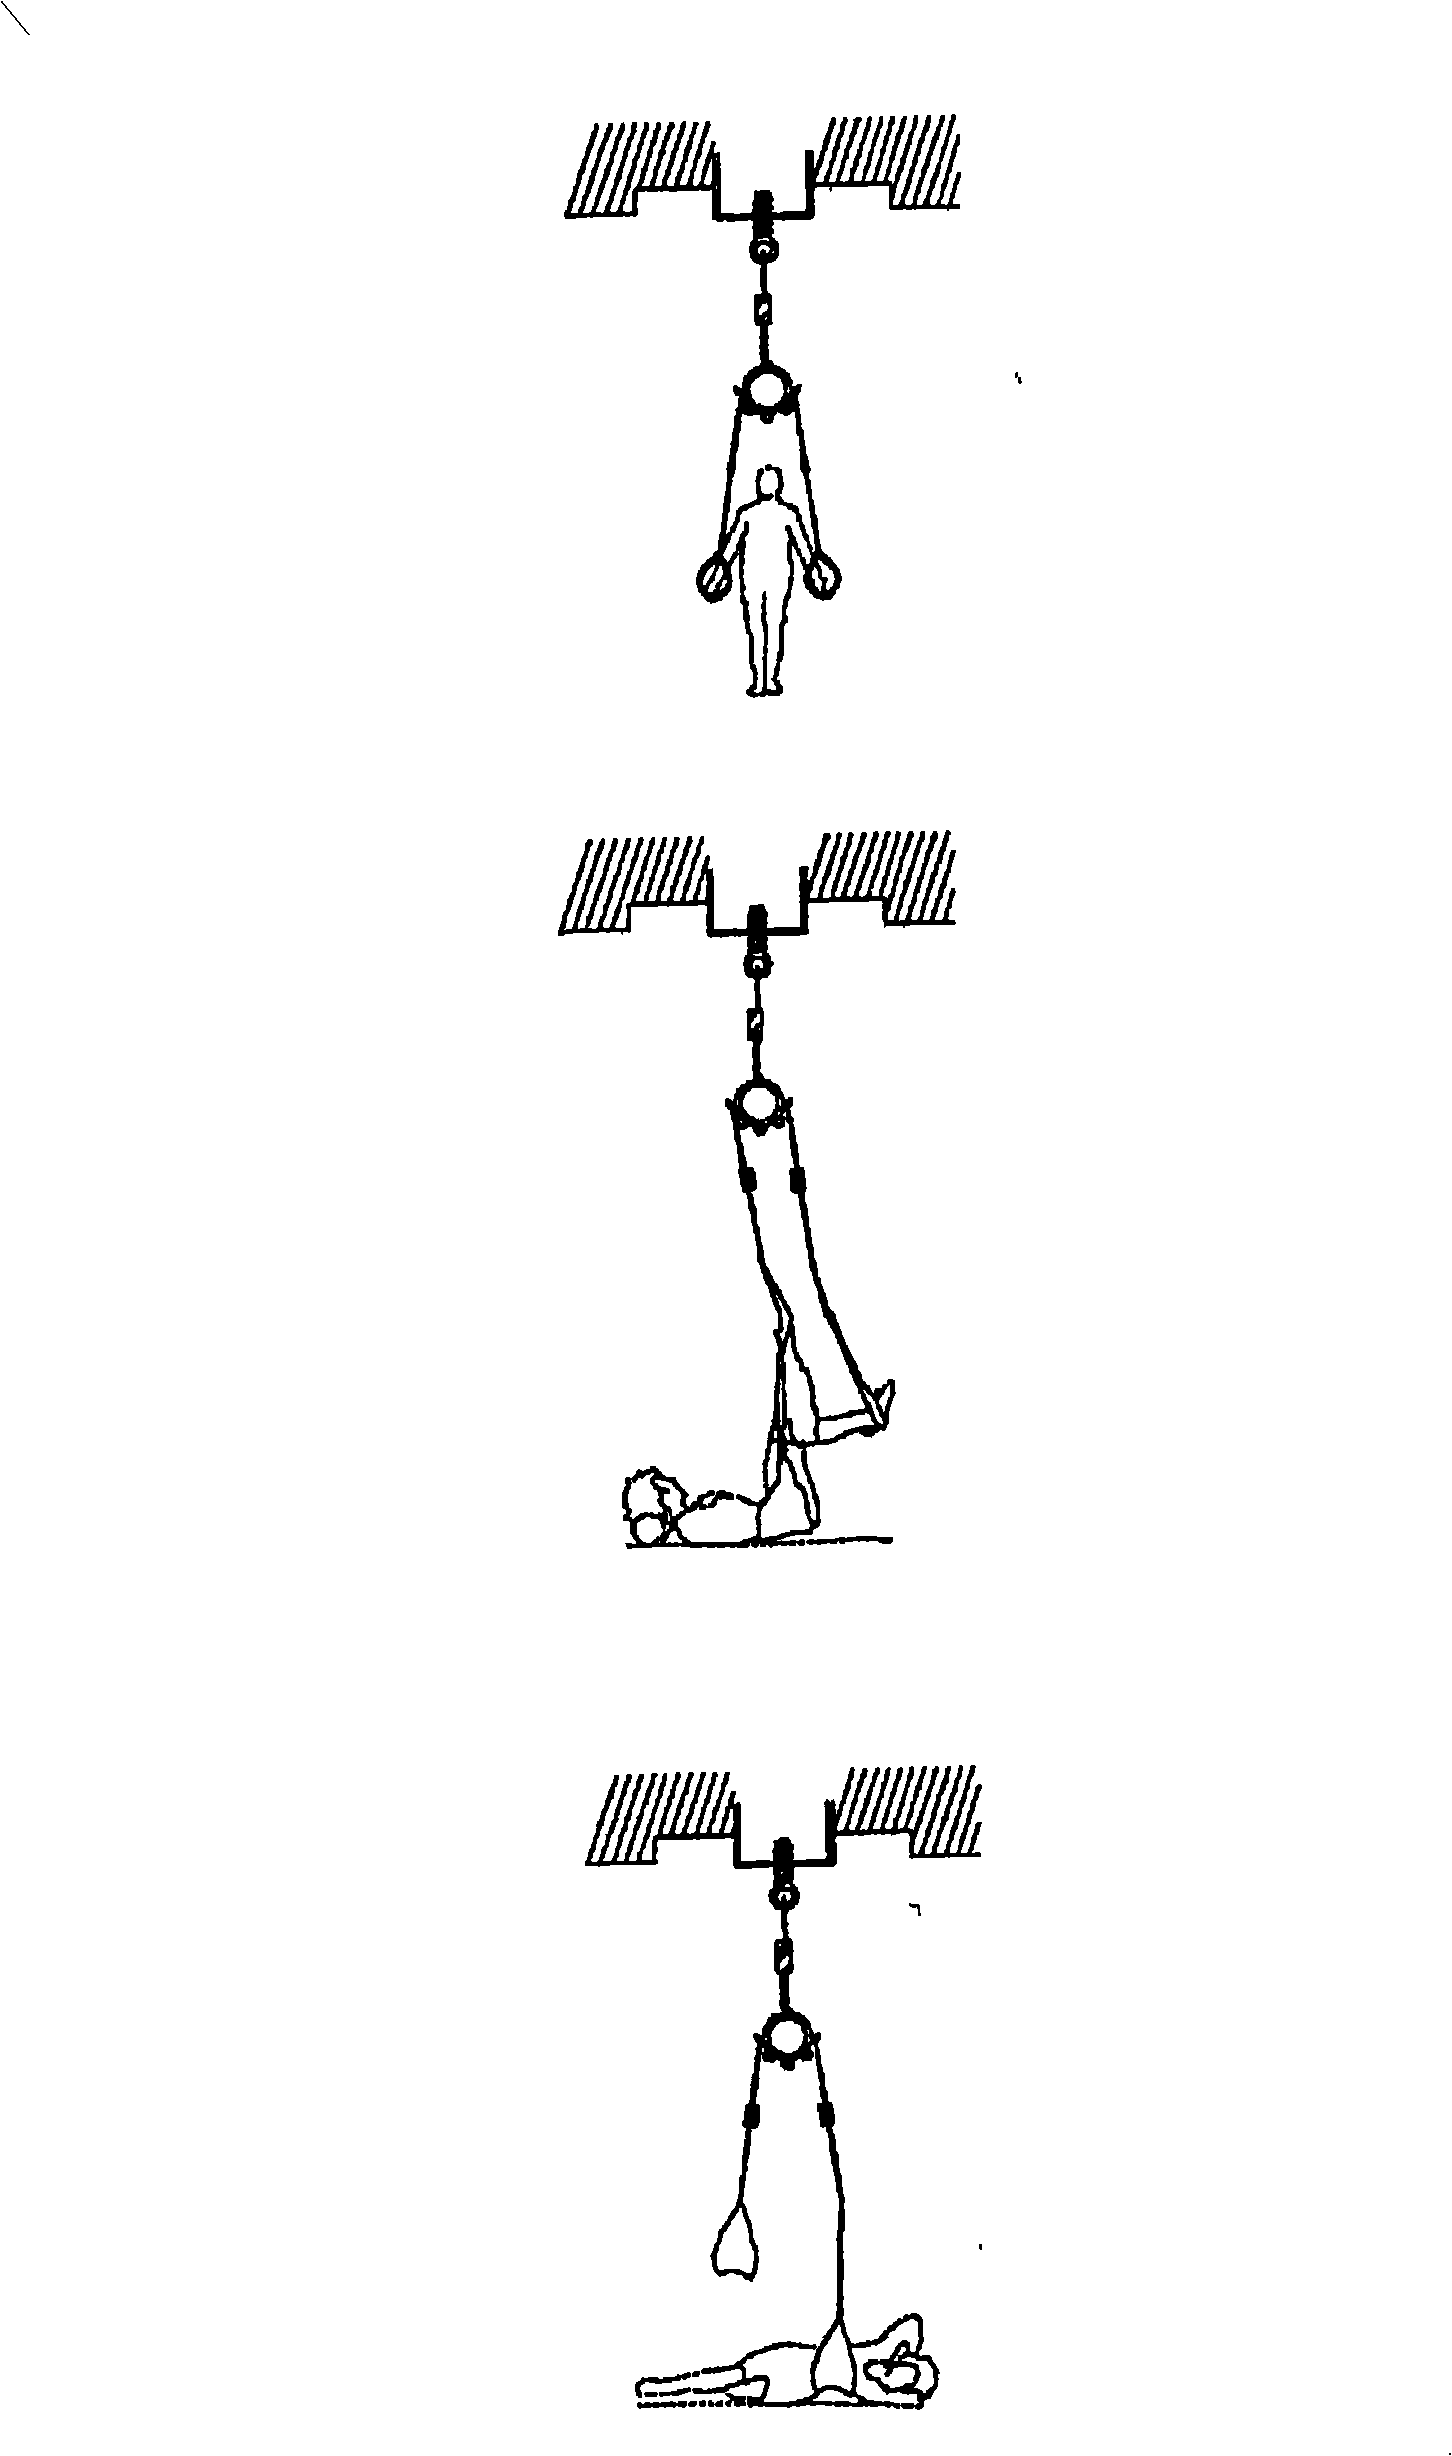 Habilitation treatment suspension device